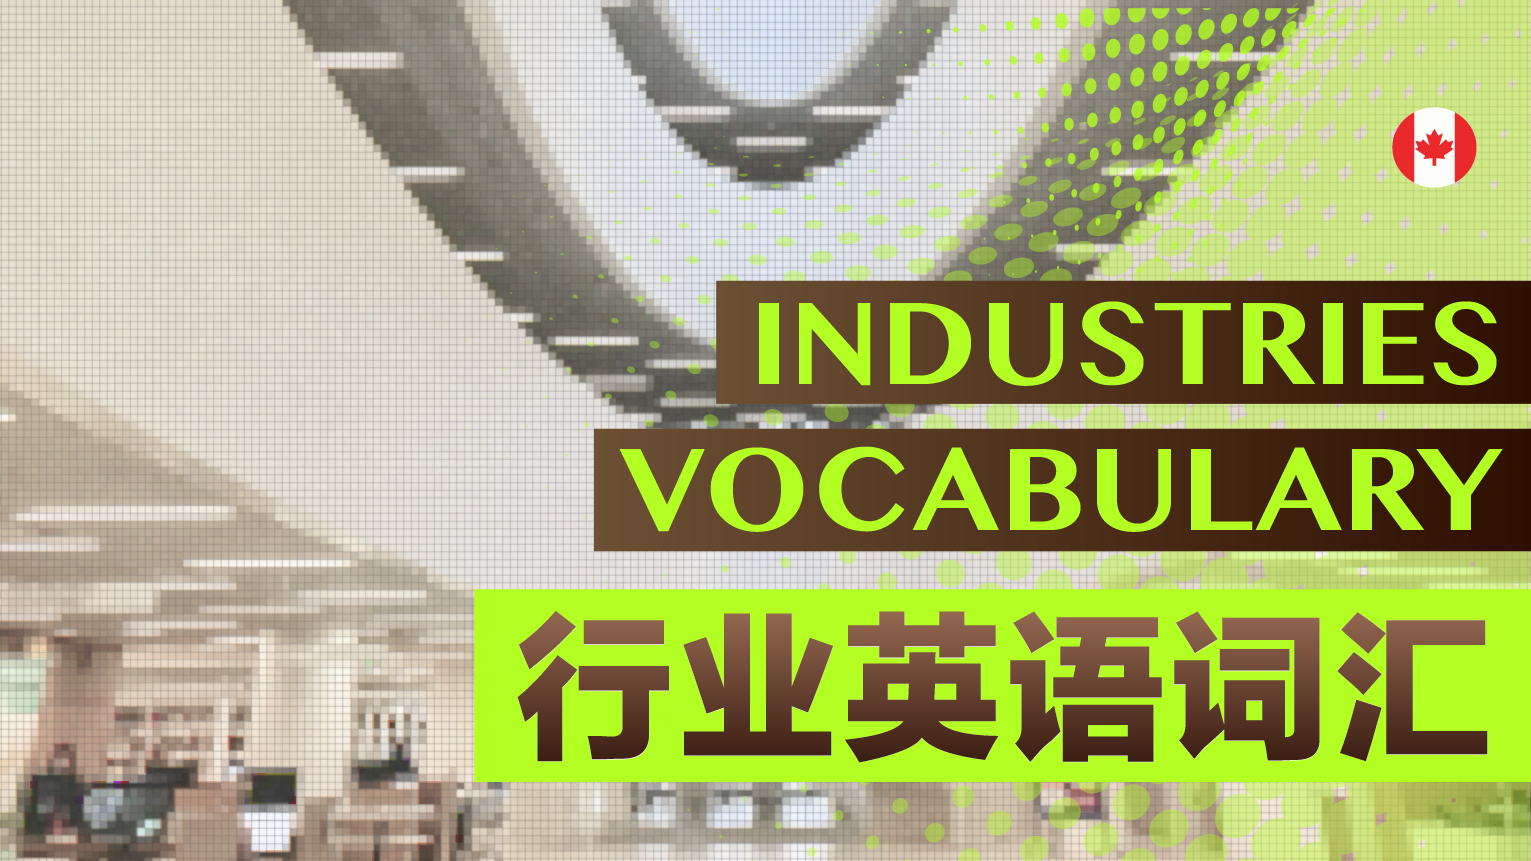 Industries Vocabulary